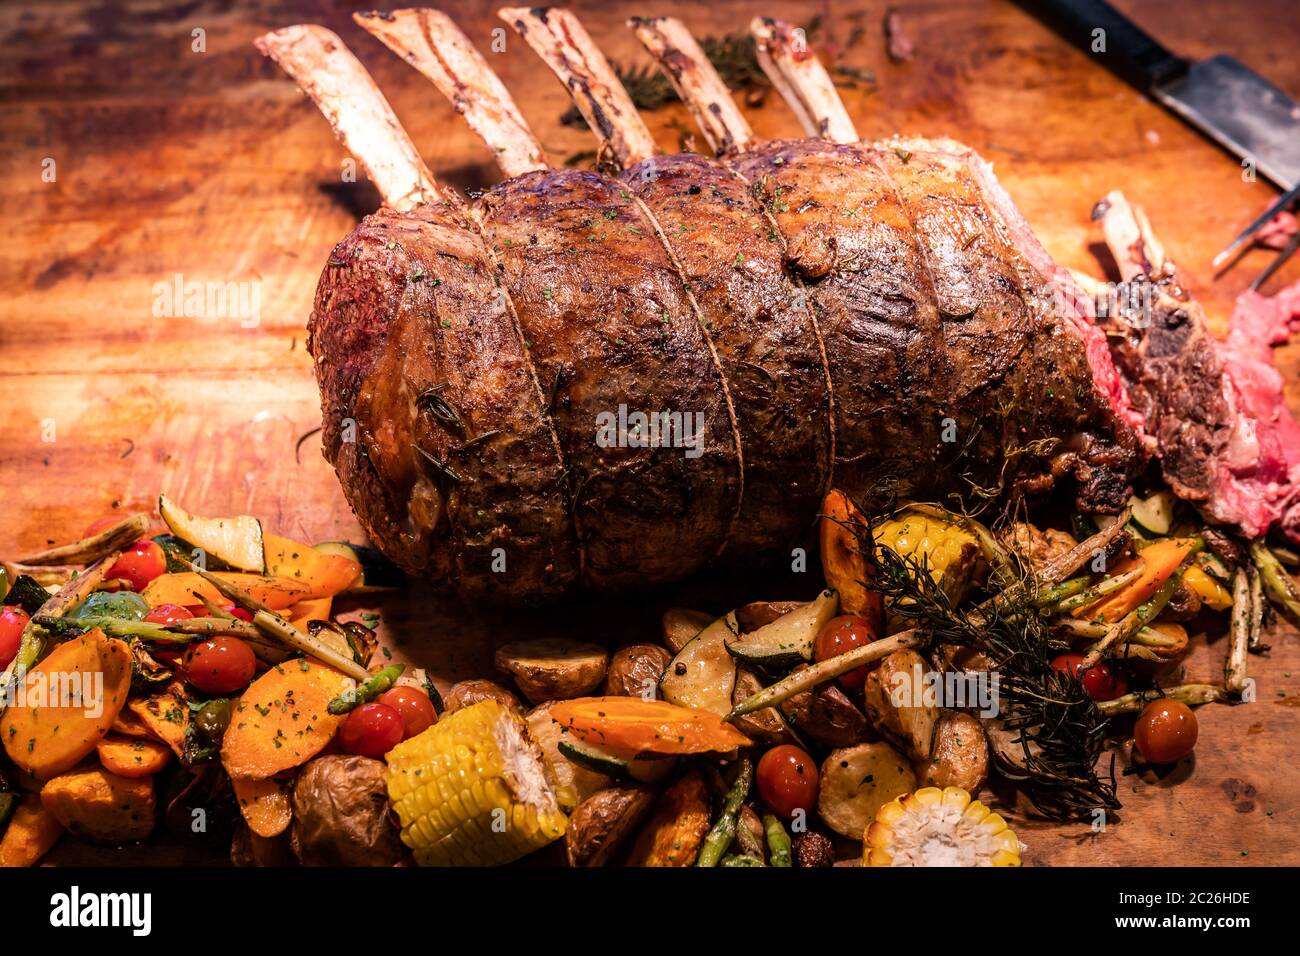 https://c8.alamy.com/comp/2C26HDE/wagyu-beef-roast-prime-rib-carving-food-2C26HDE.jpg